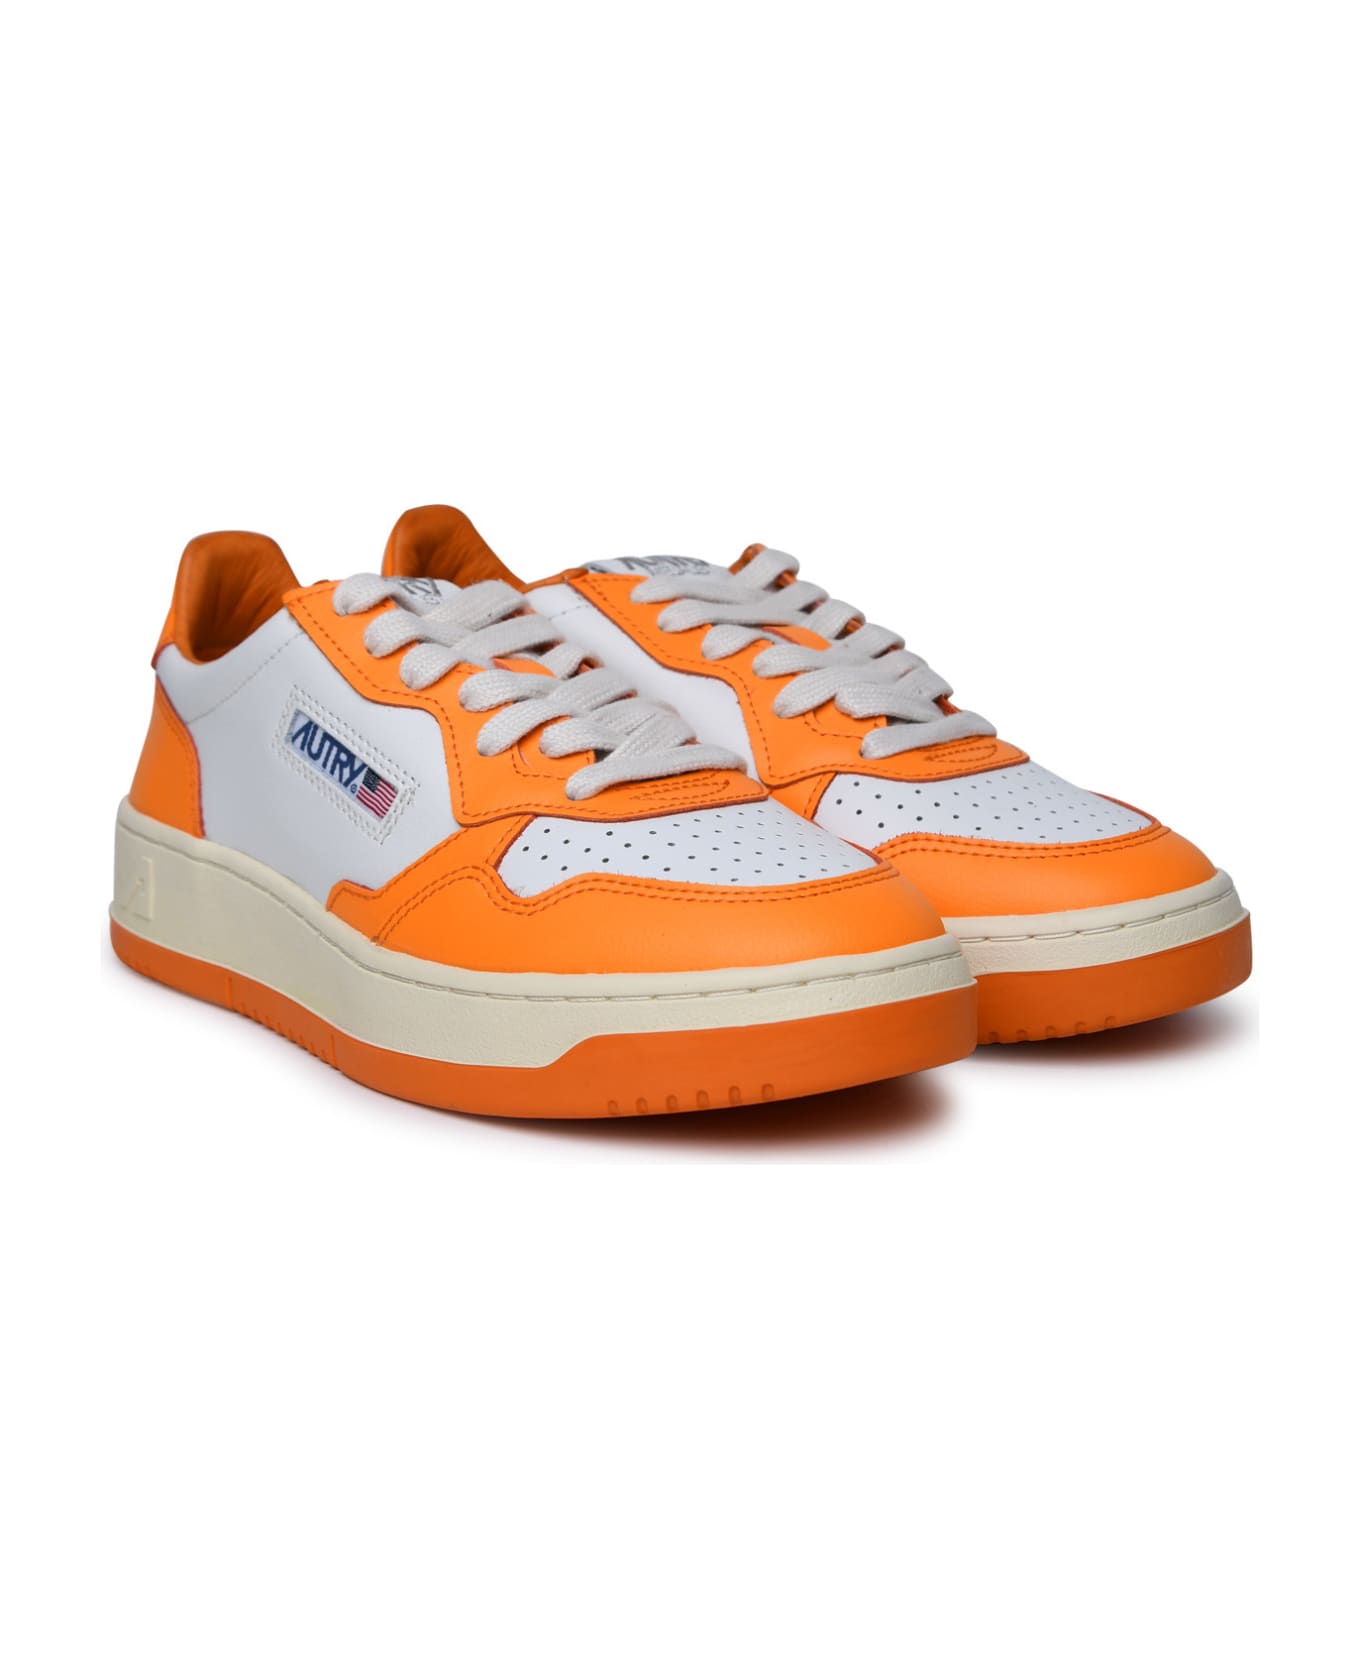 Autry 'medalist' Orange Leather Sneakers - White Orange